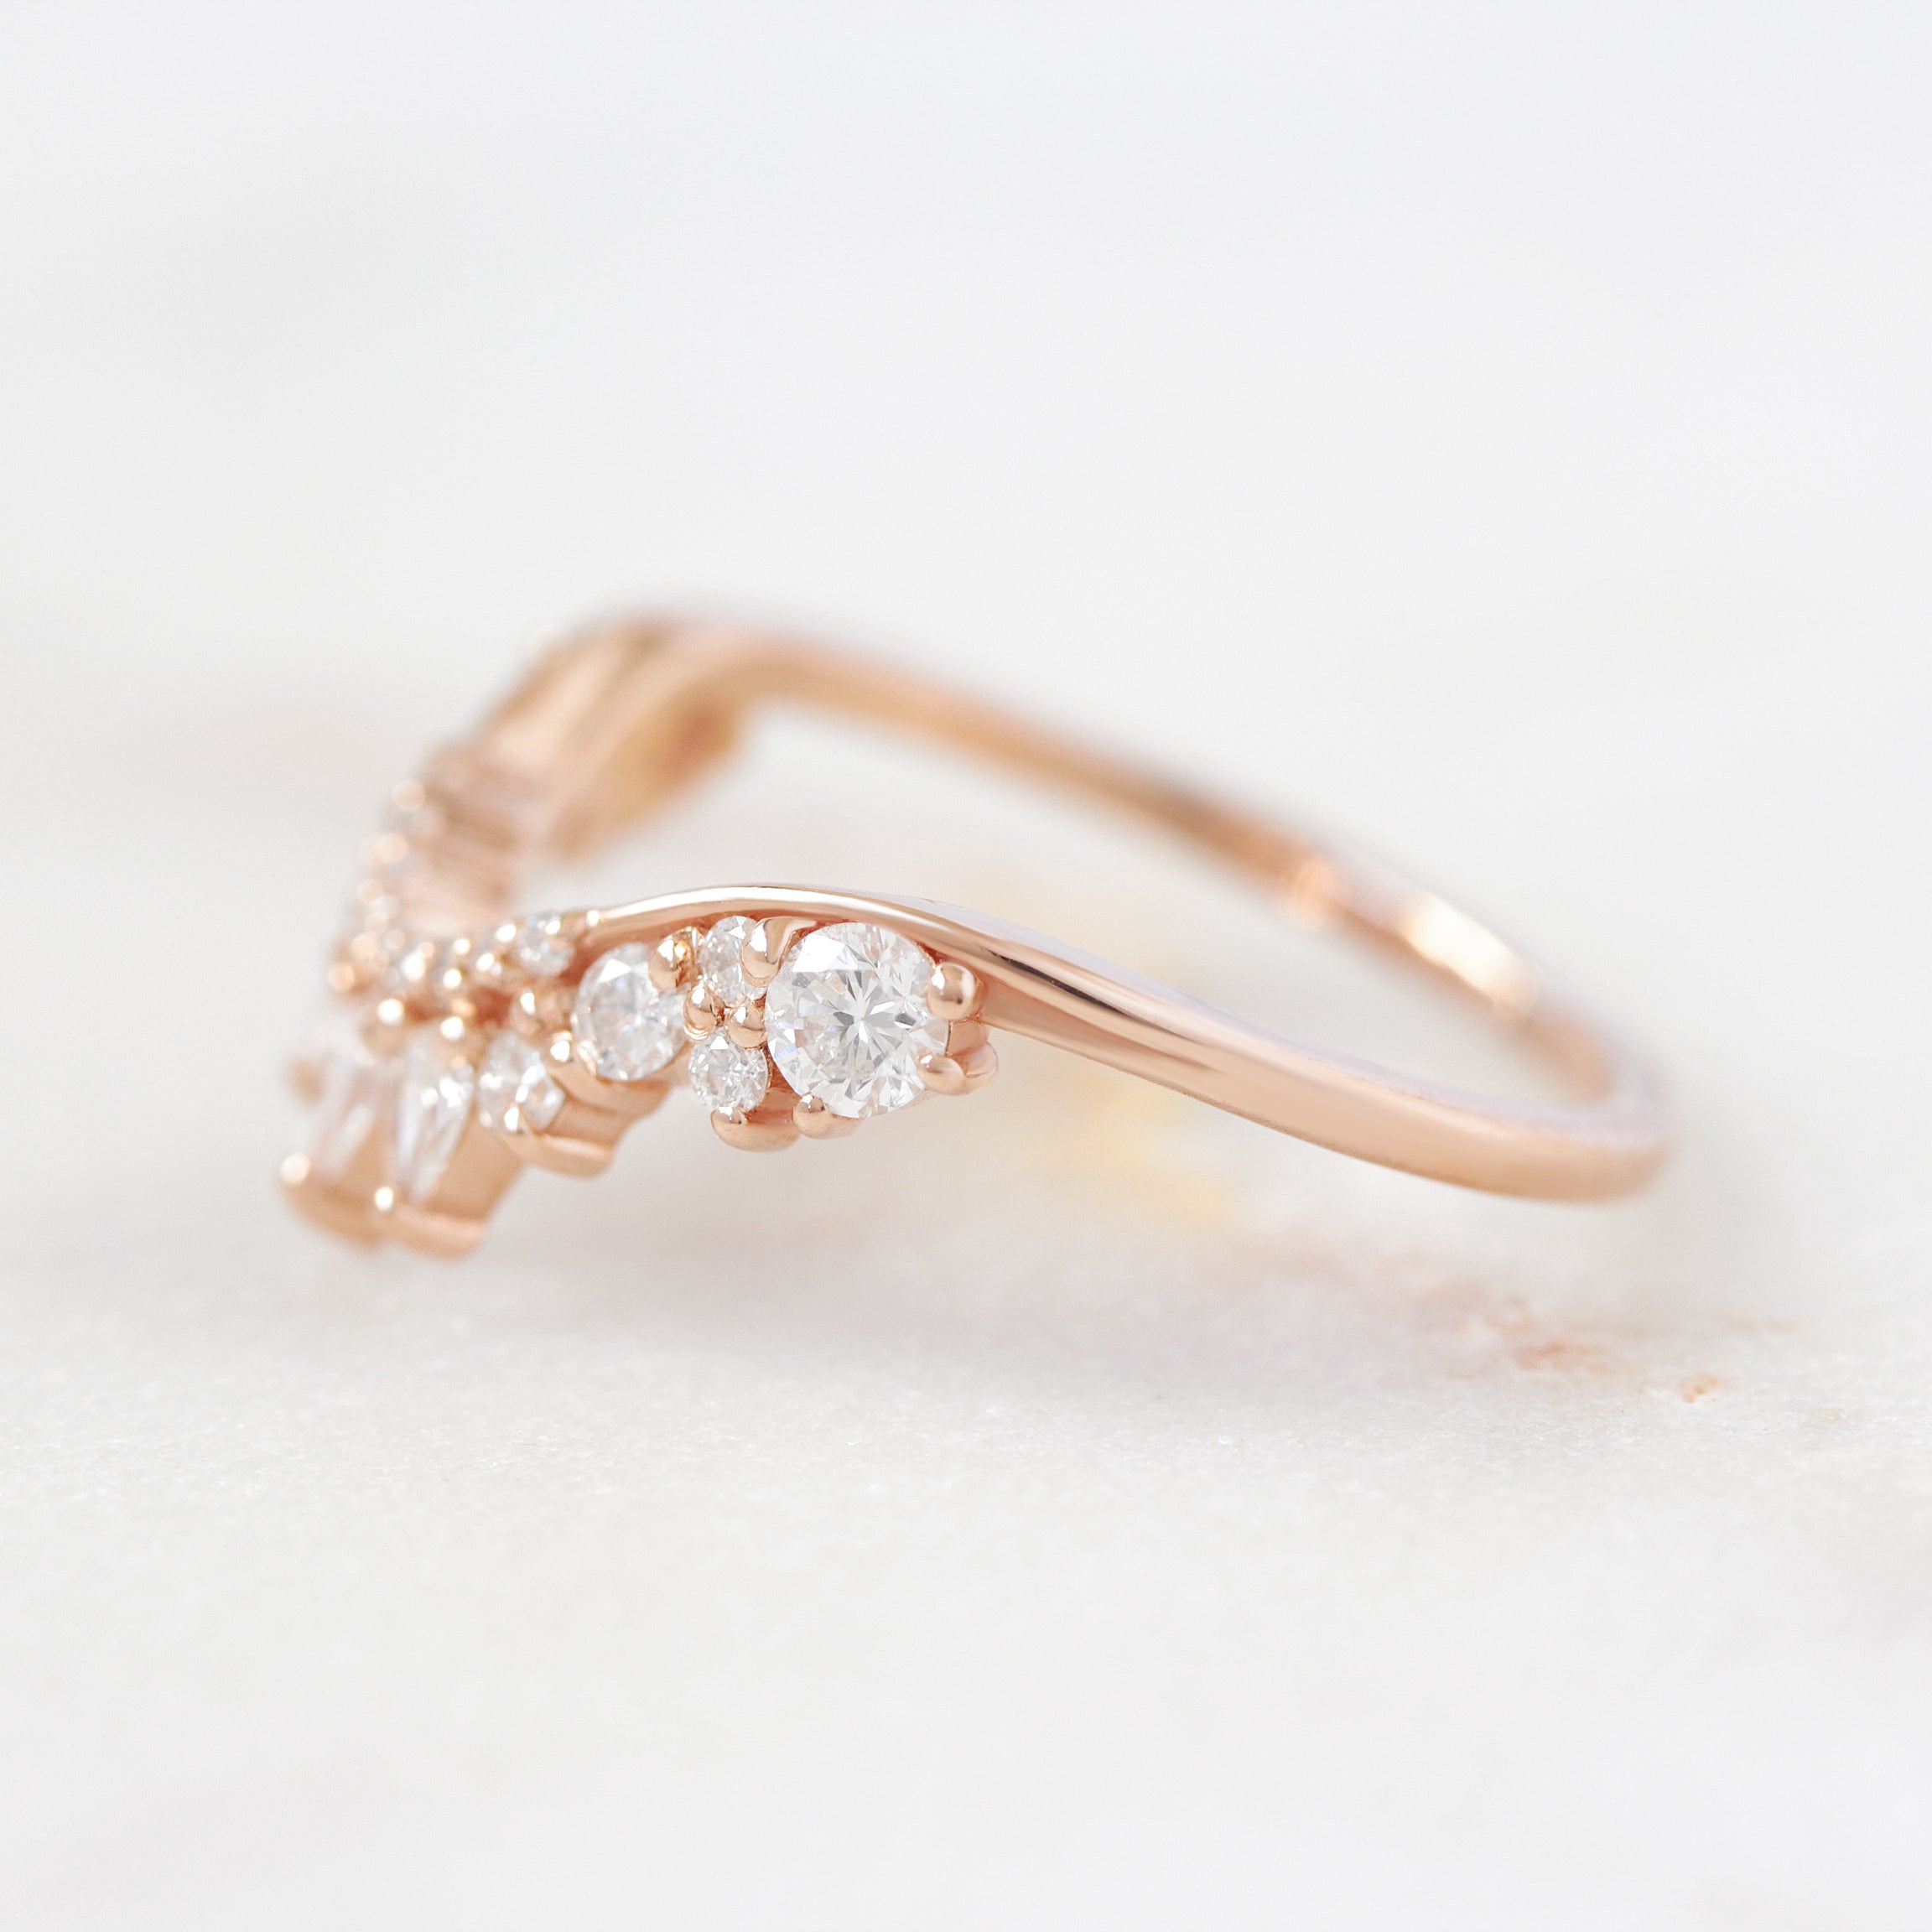 Marquise Diamond Wedding Ring - Valeria, 14K Rose Gold, Sizes 5-8, READY TO SHIP! ♥